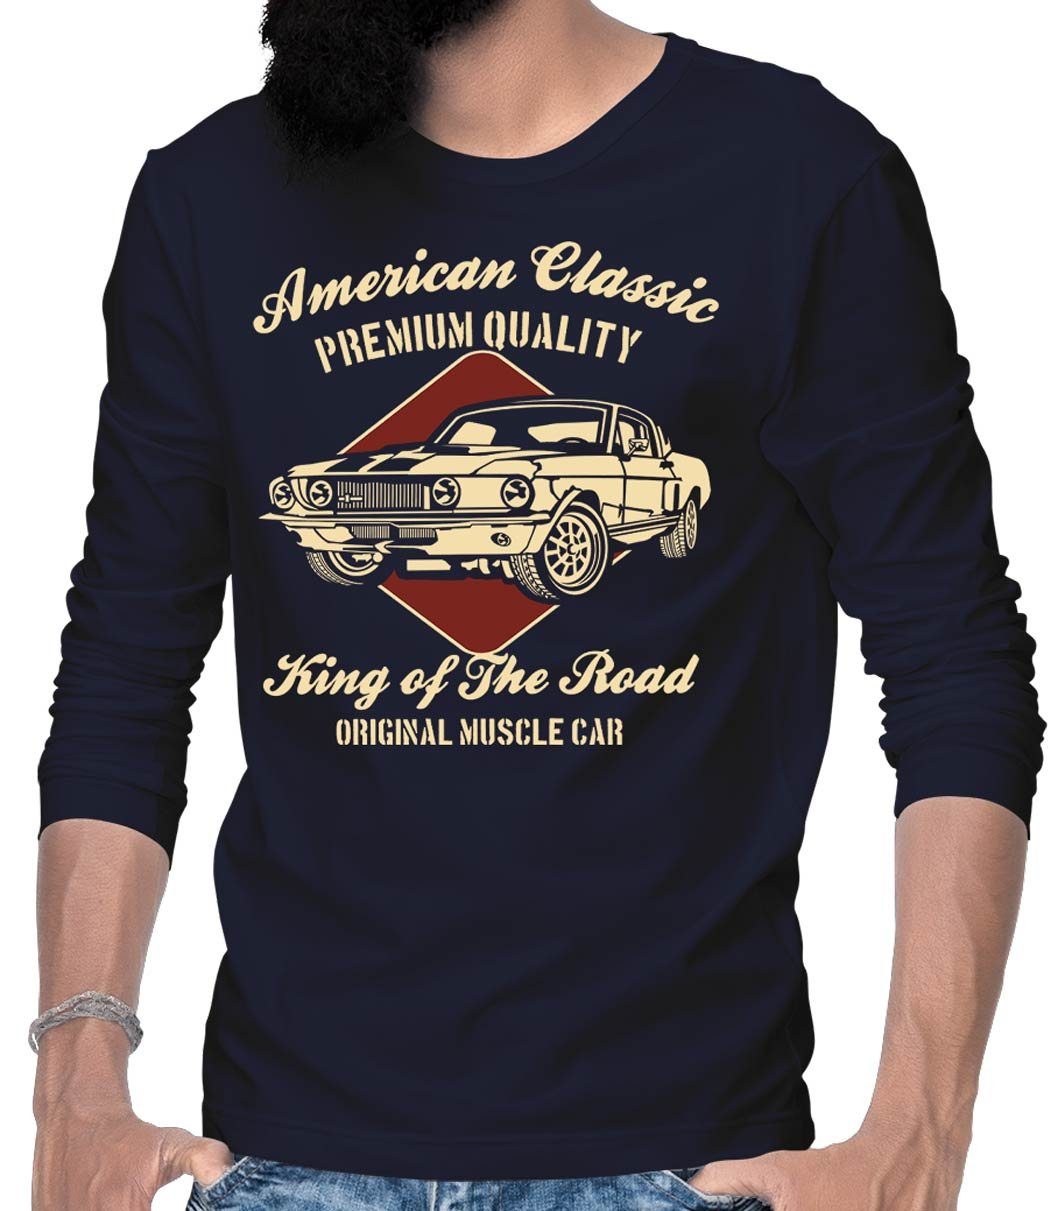 Rebel On Wheels Longsleeve Herren Tee mit Classics Blau T-Shirt American Langarm Motiv US-Car Auto / Longsleeve